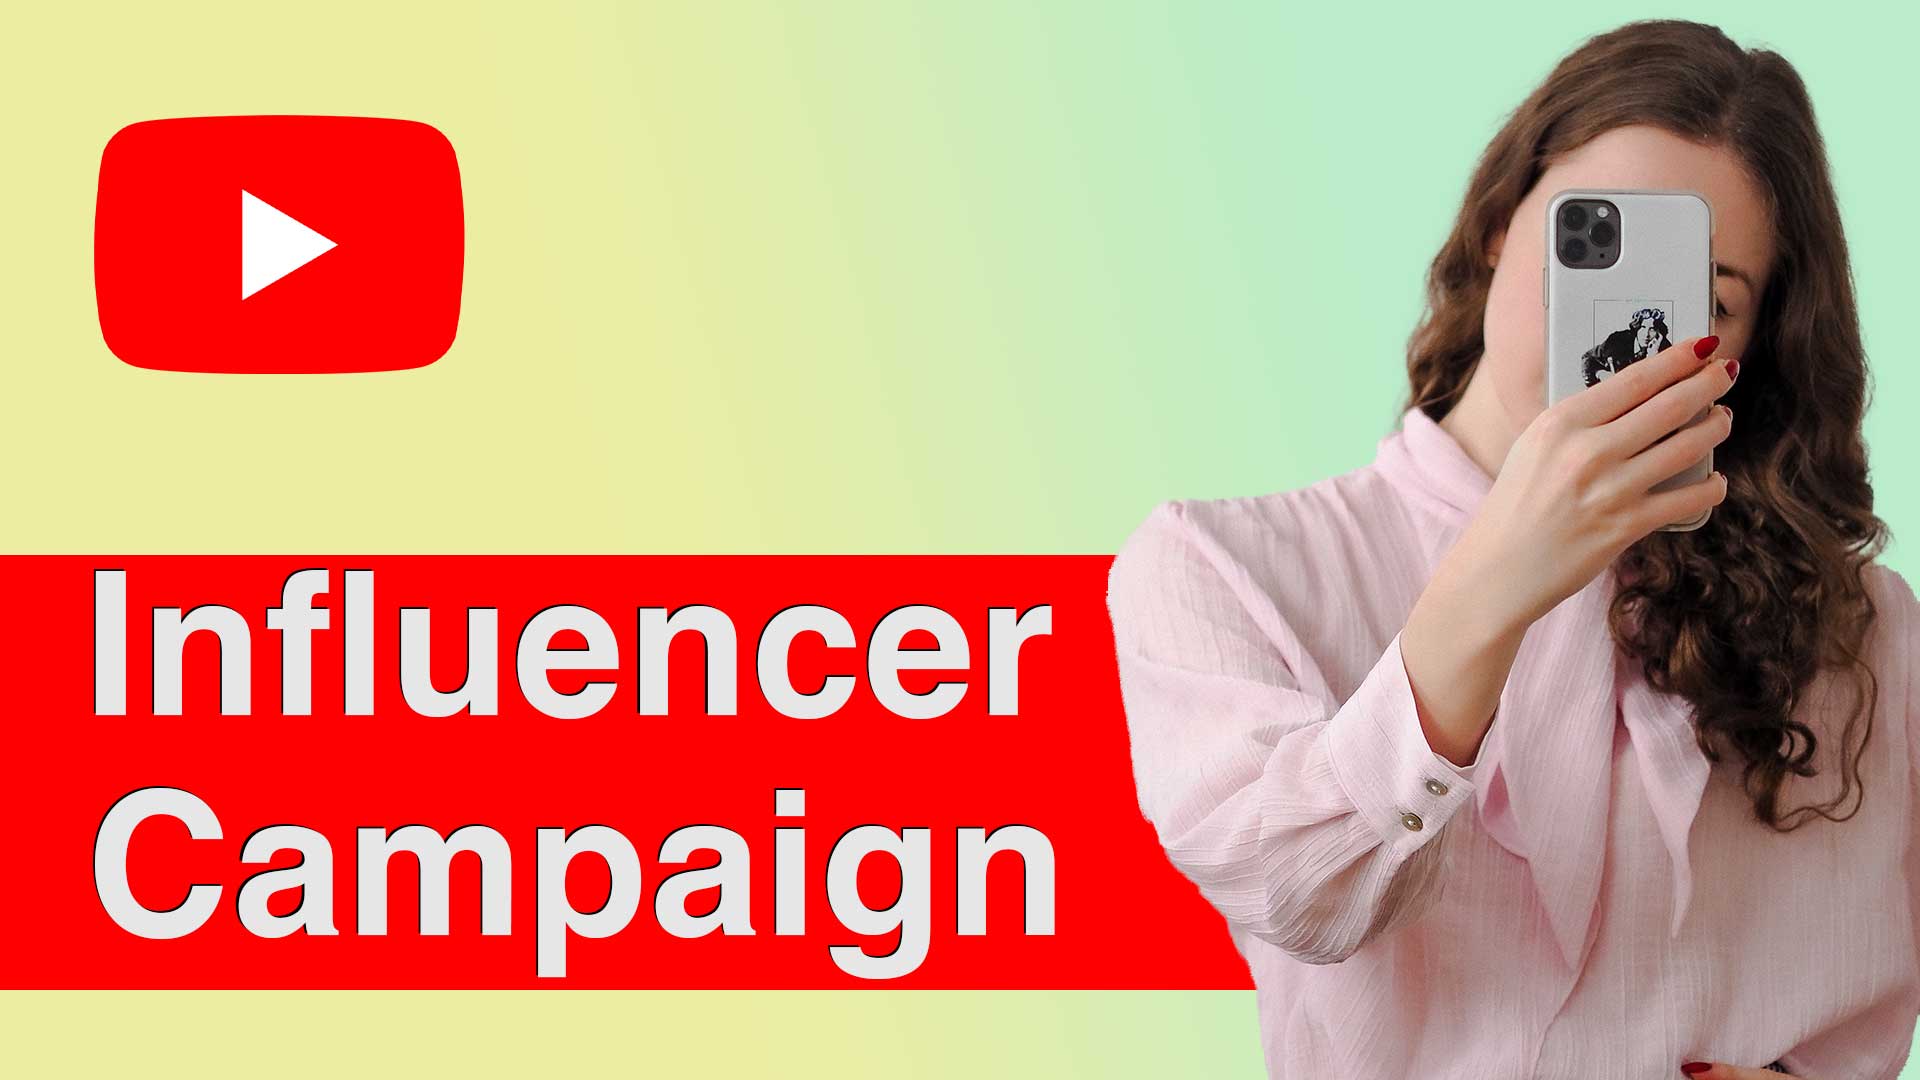 youtubelogo_influencer_campaign_frau_rechts